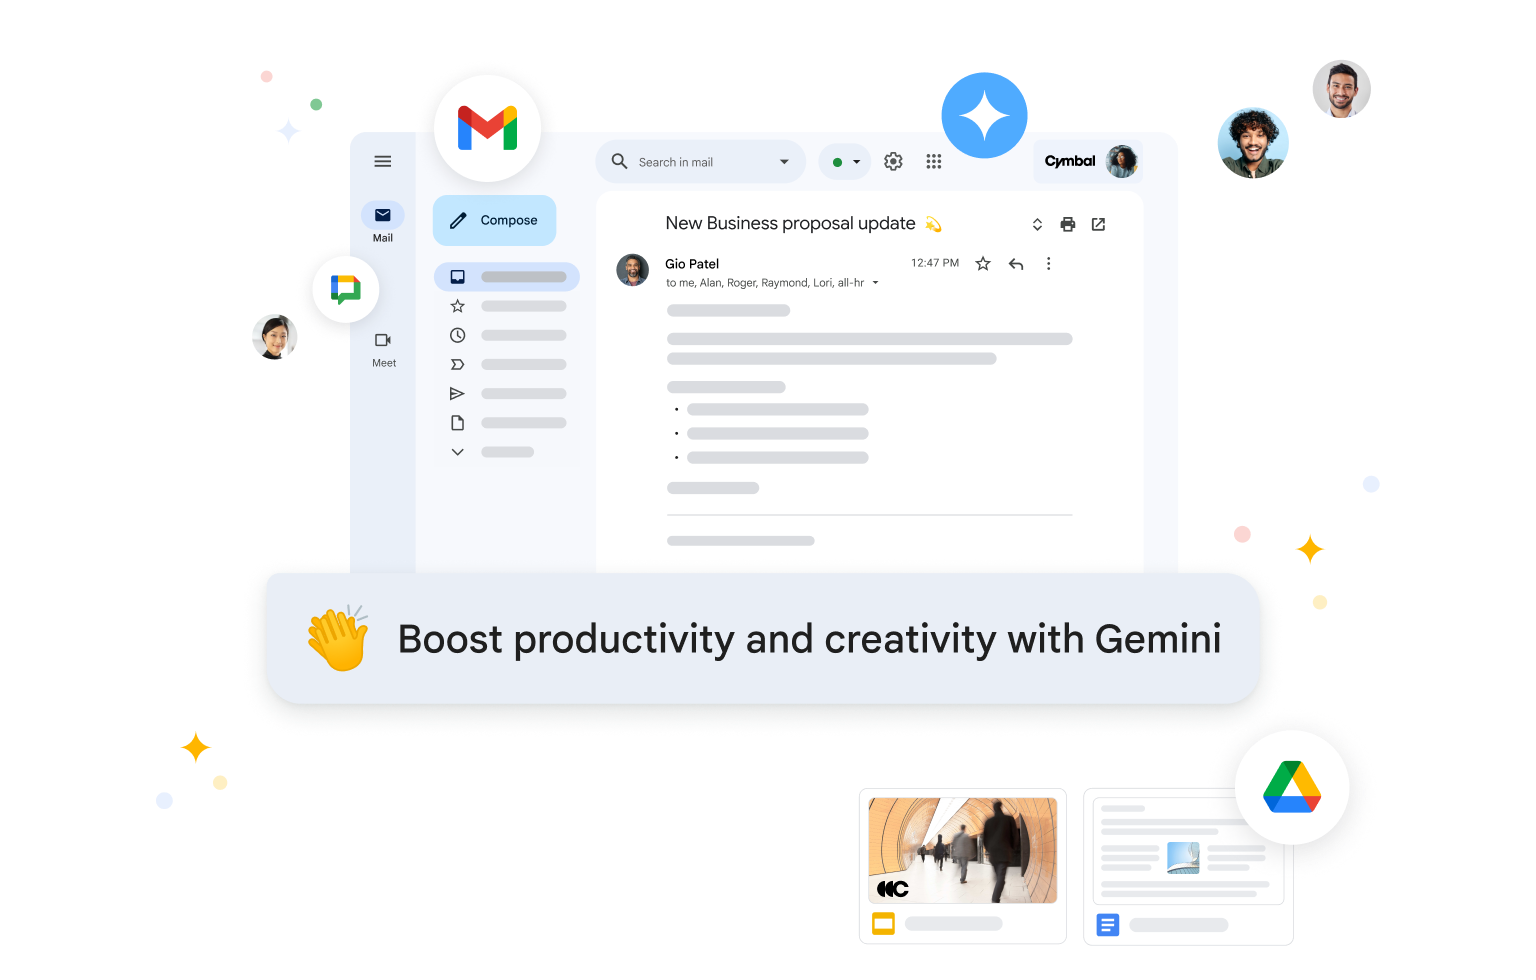 Workspace 專用 Gemini 可在 Gmail 中生成電子郵件摘要和提供回覆建議，協助提升工作效率。